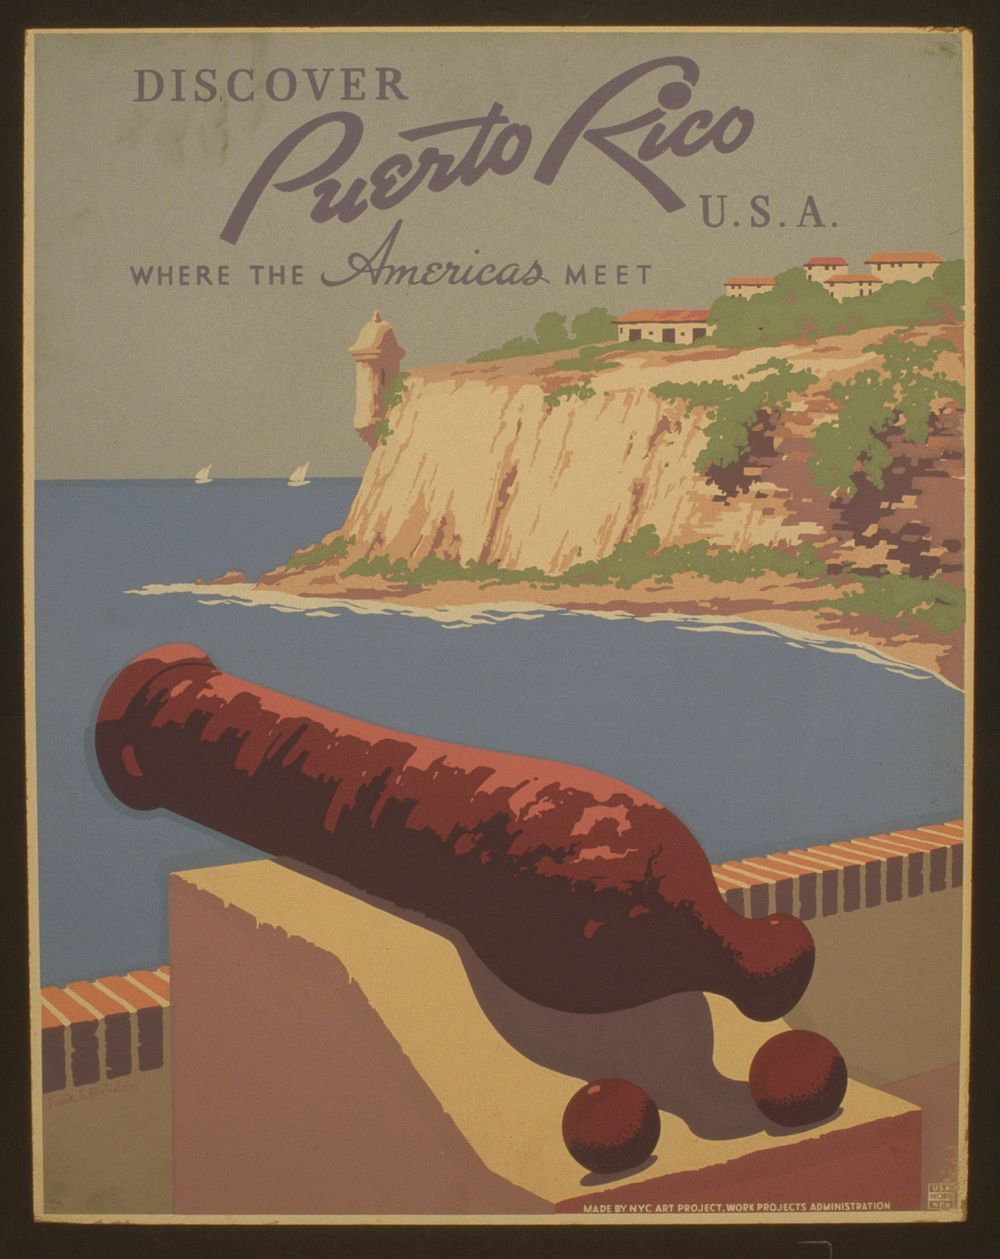 Discover Puerto Rico U.S.A. Where the Americas meet / / Frank S. Nicholson.